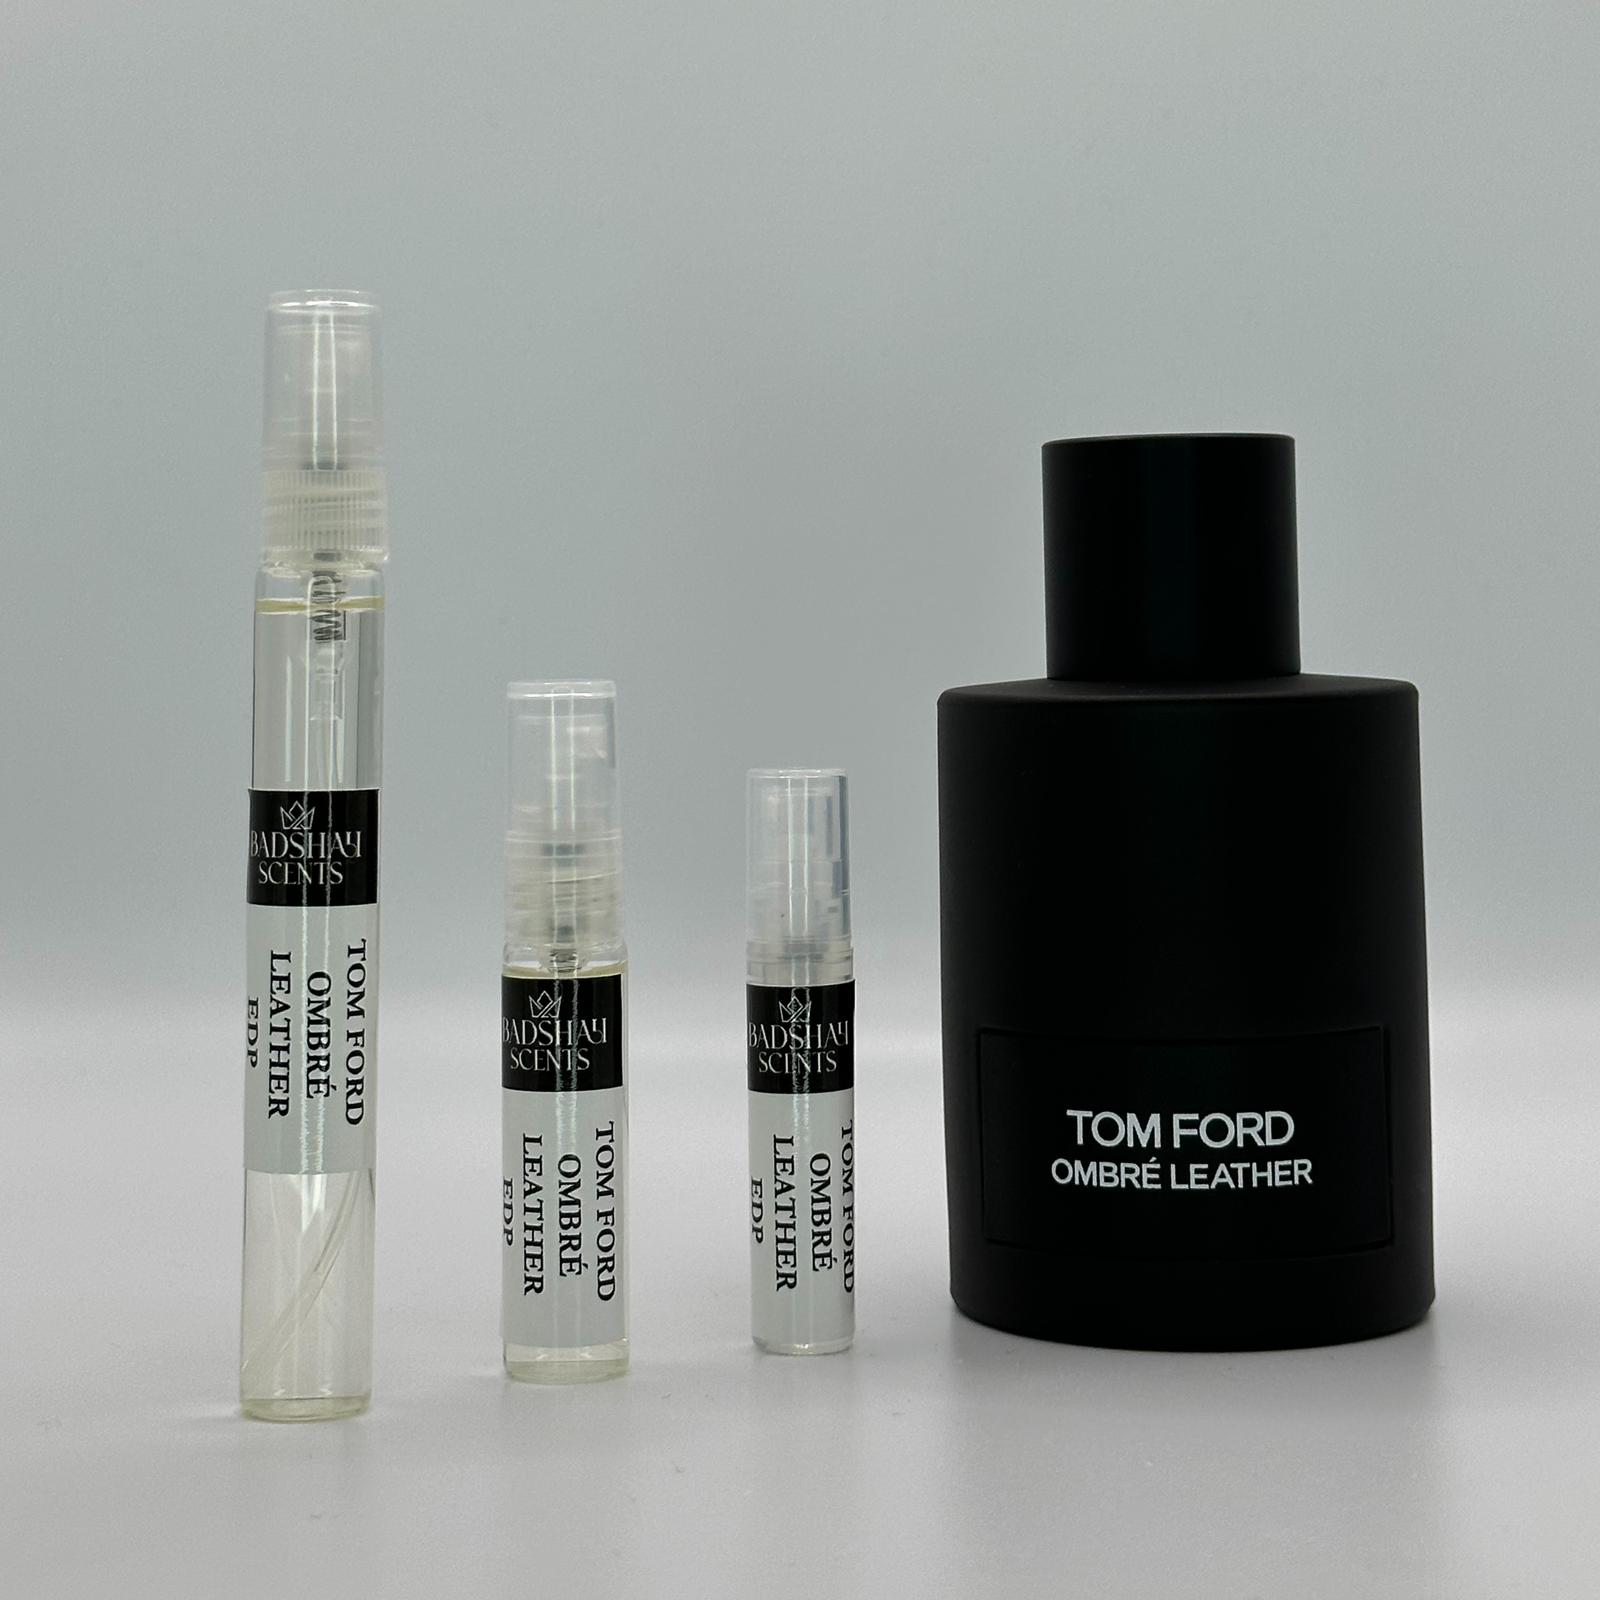 Tom Ford Ombre Leather Parfum, Fragrance Sample